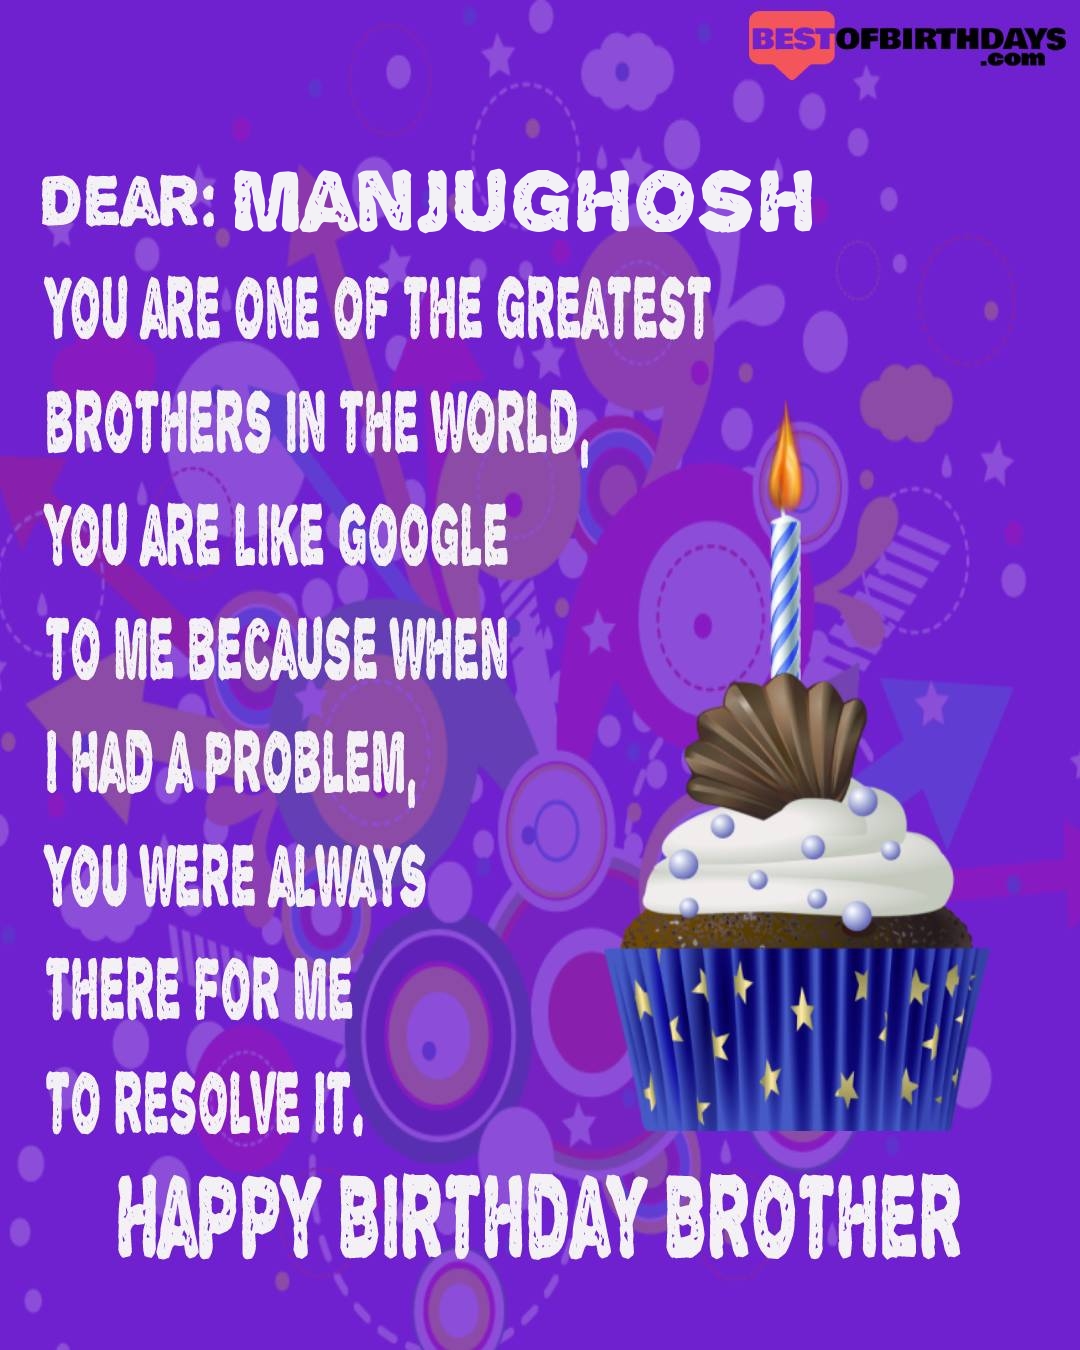 Happy birthday manjughosh bhai brother bro